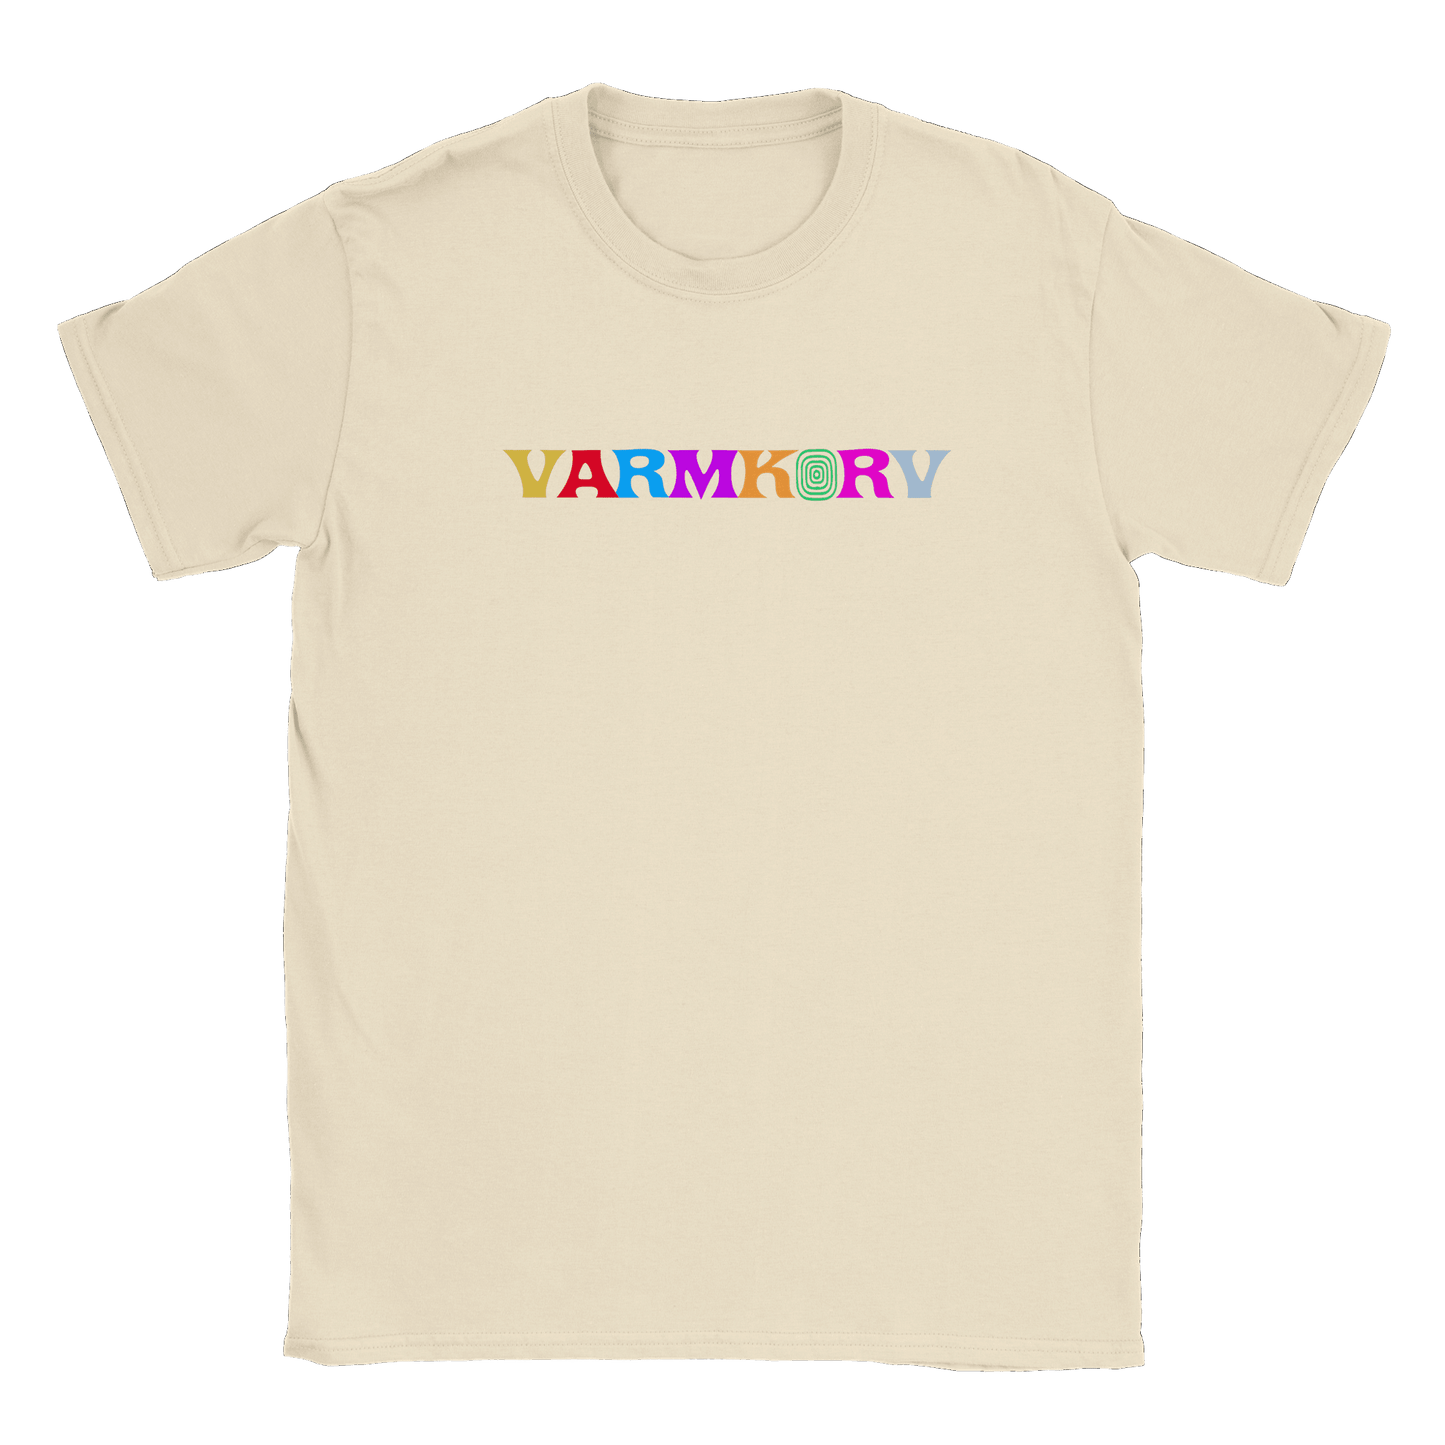 Varmkorv - T-shirt Natural